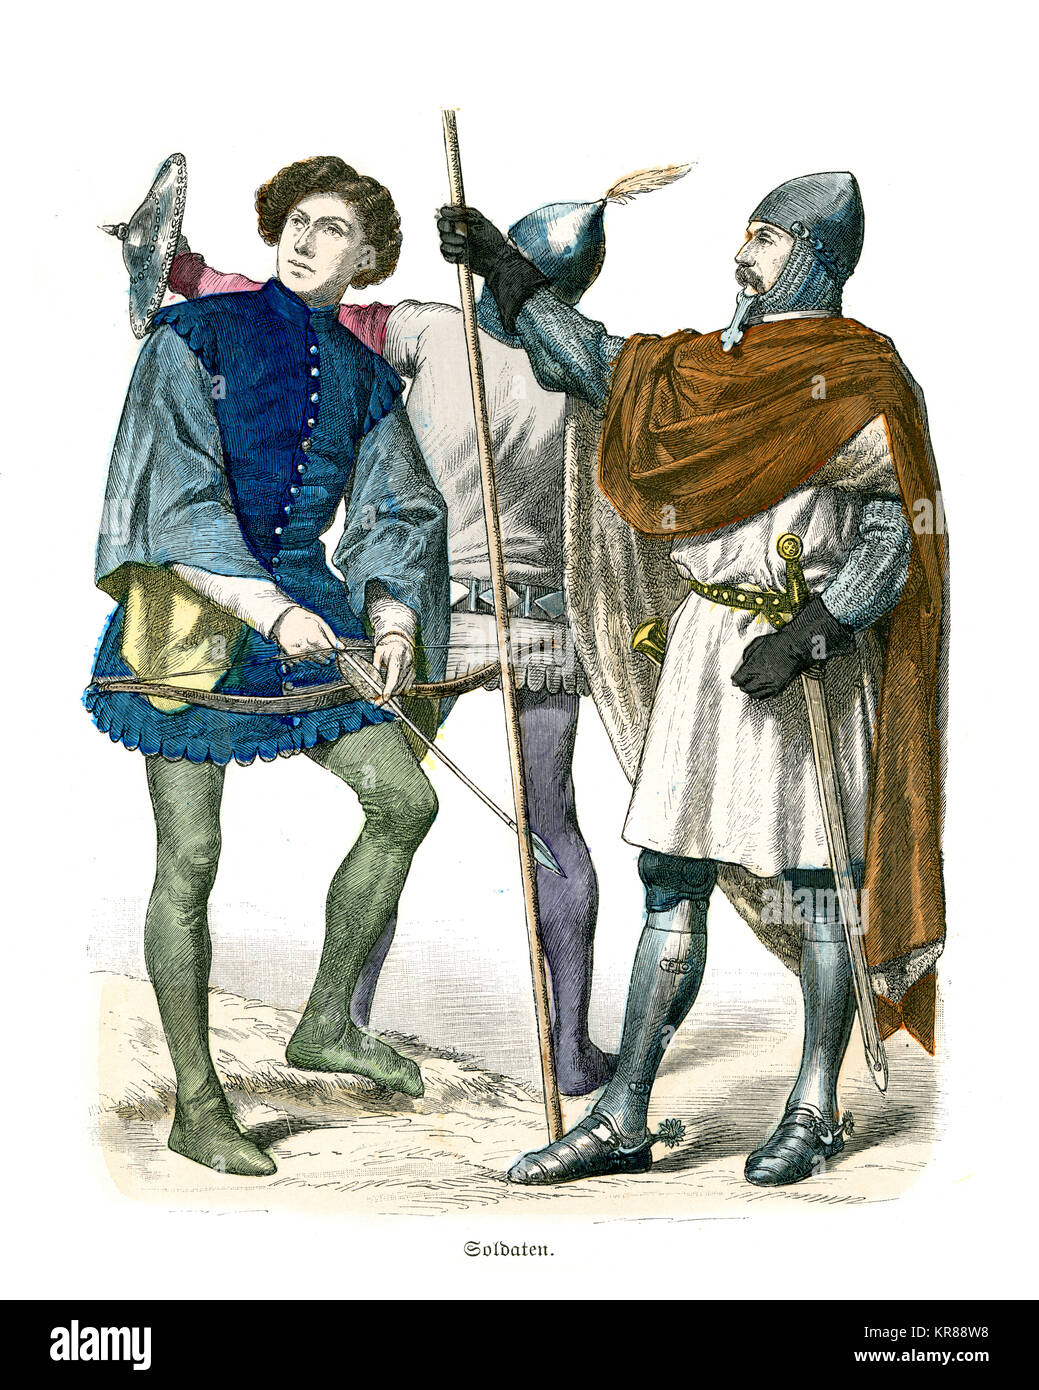 14th century archer fotografías e imágenes de alta resolución - Alamy